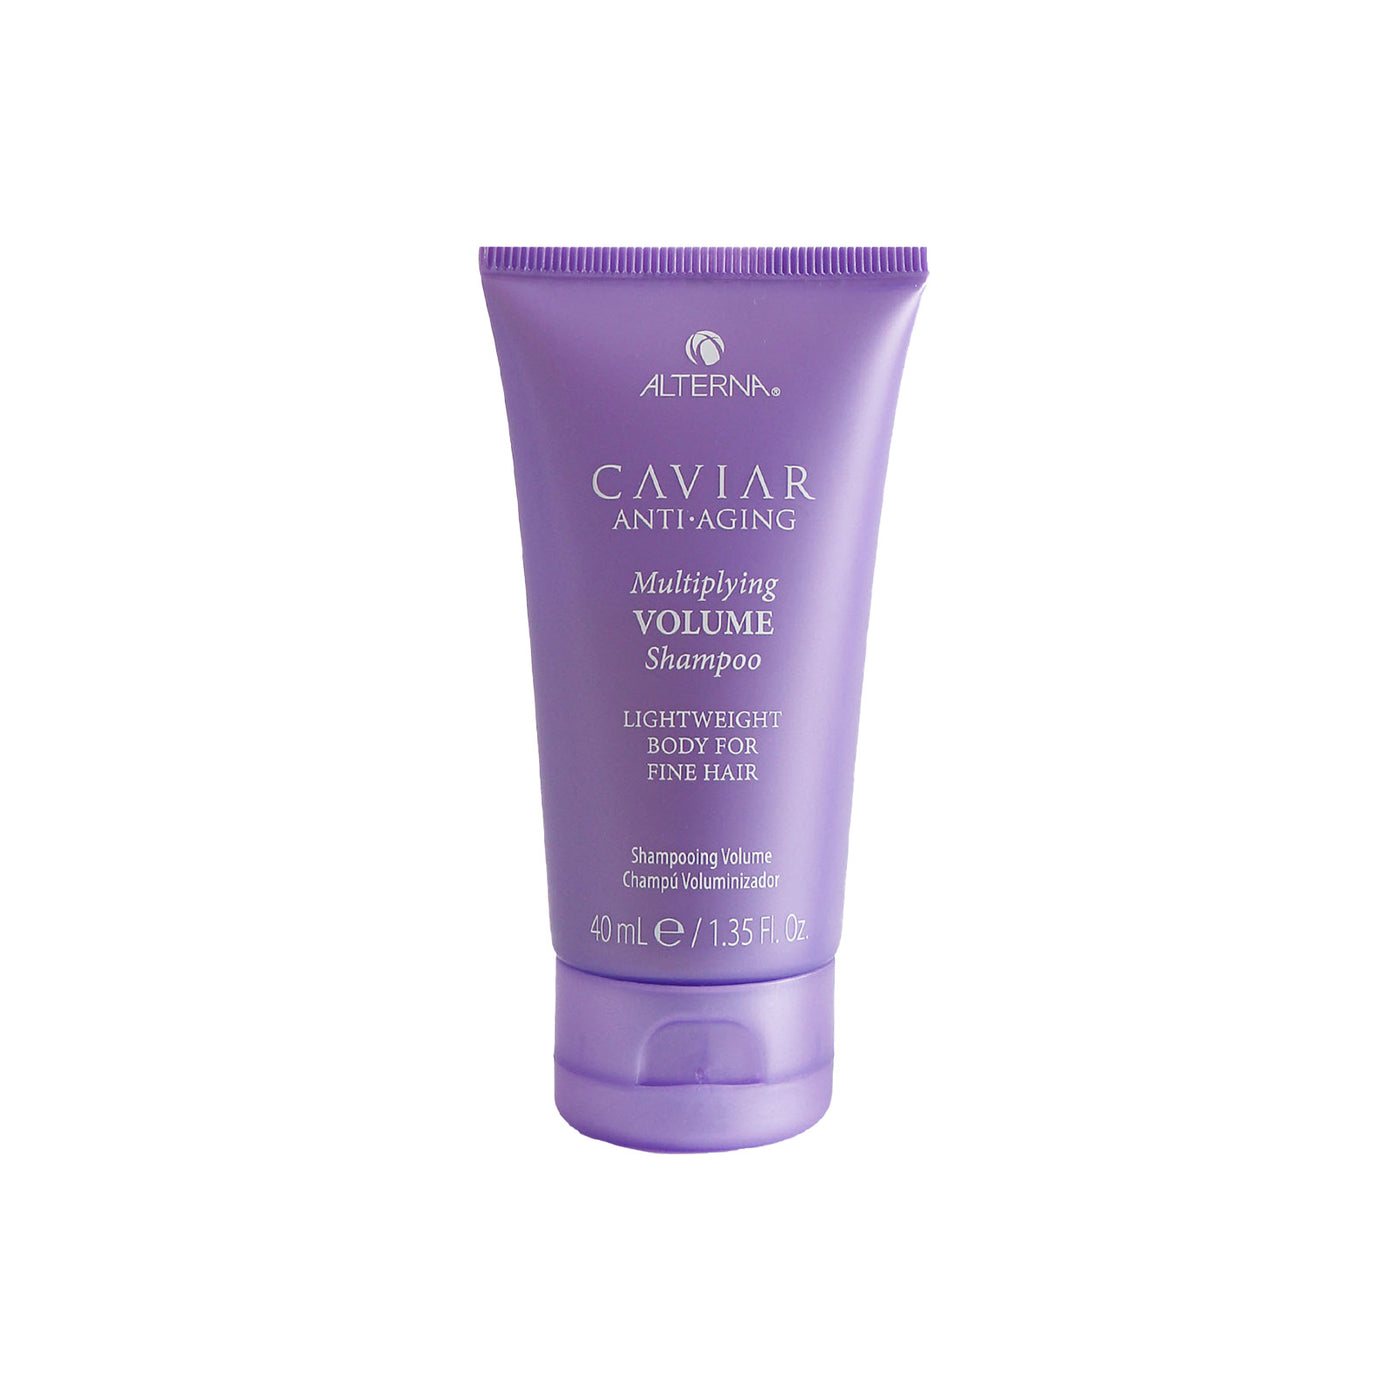 Alterna Caviar Anti-Aging Multiplying Volume Shampoo Mini 40ml